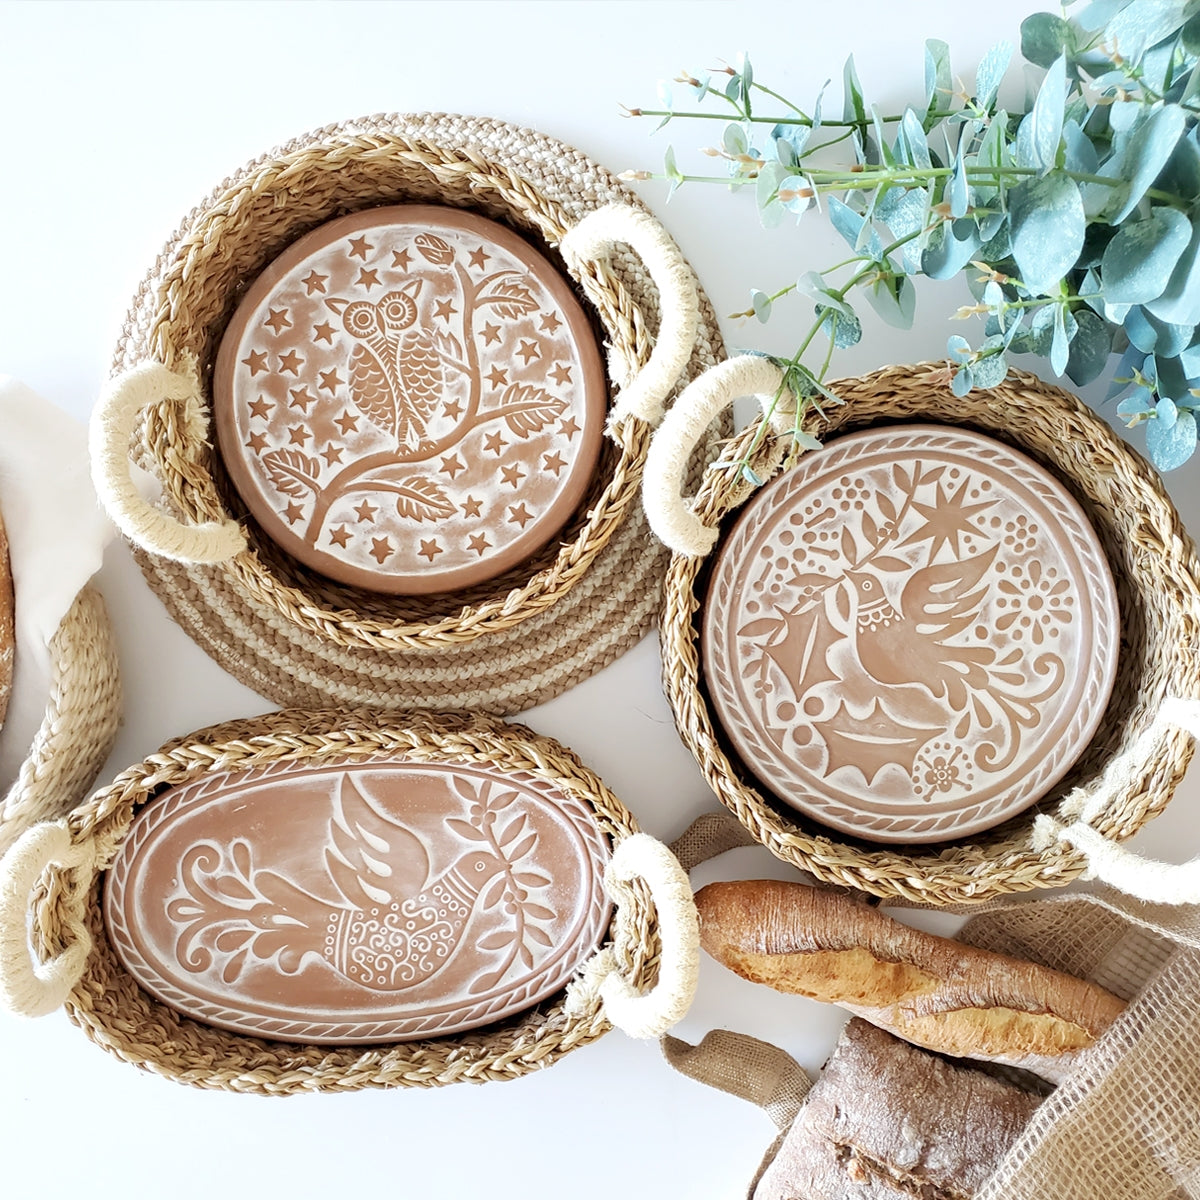 Handmade Bread Warmer & Wicker Basket -Round